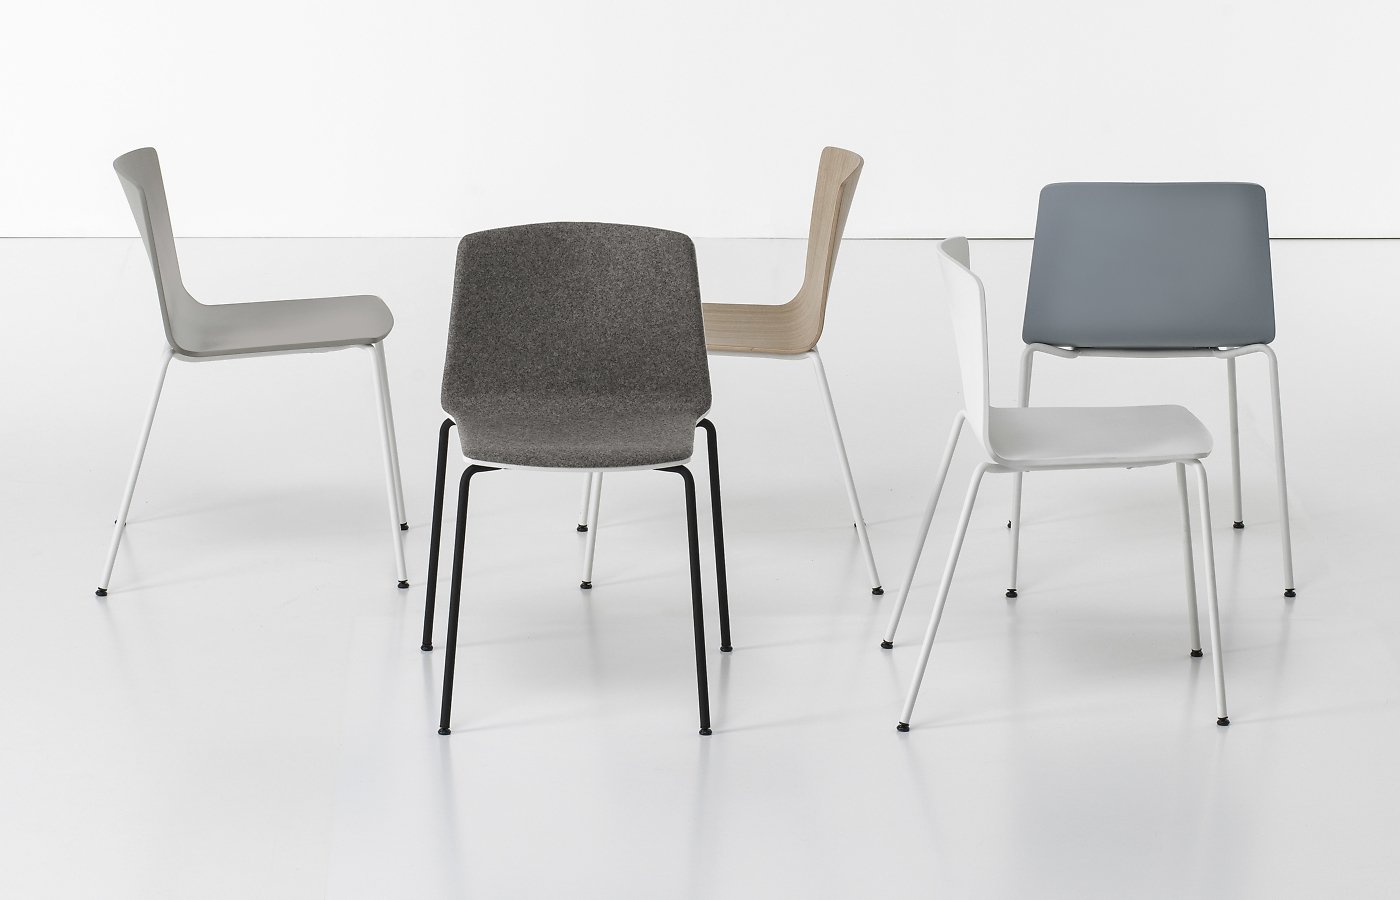 Rama Four Legs Chair from Kristalia, designed by Ramos-Bassols